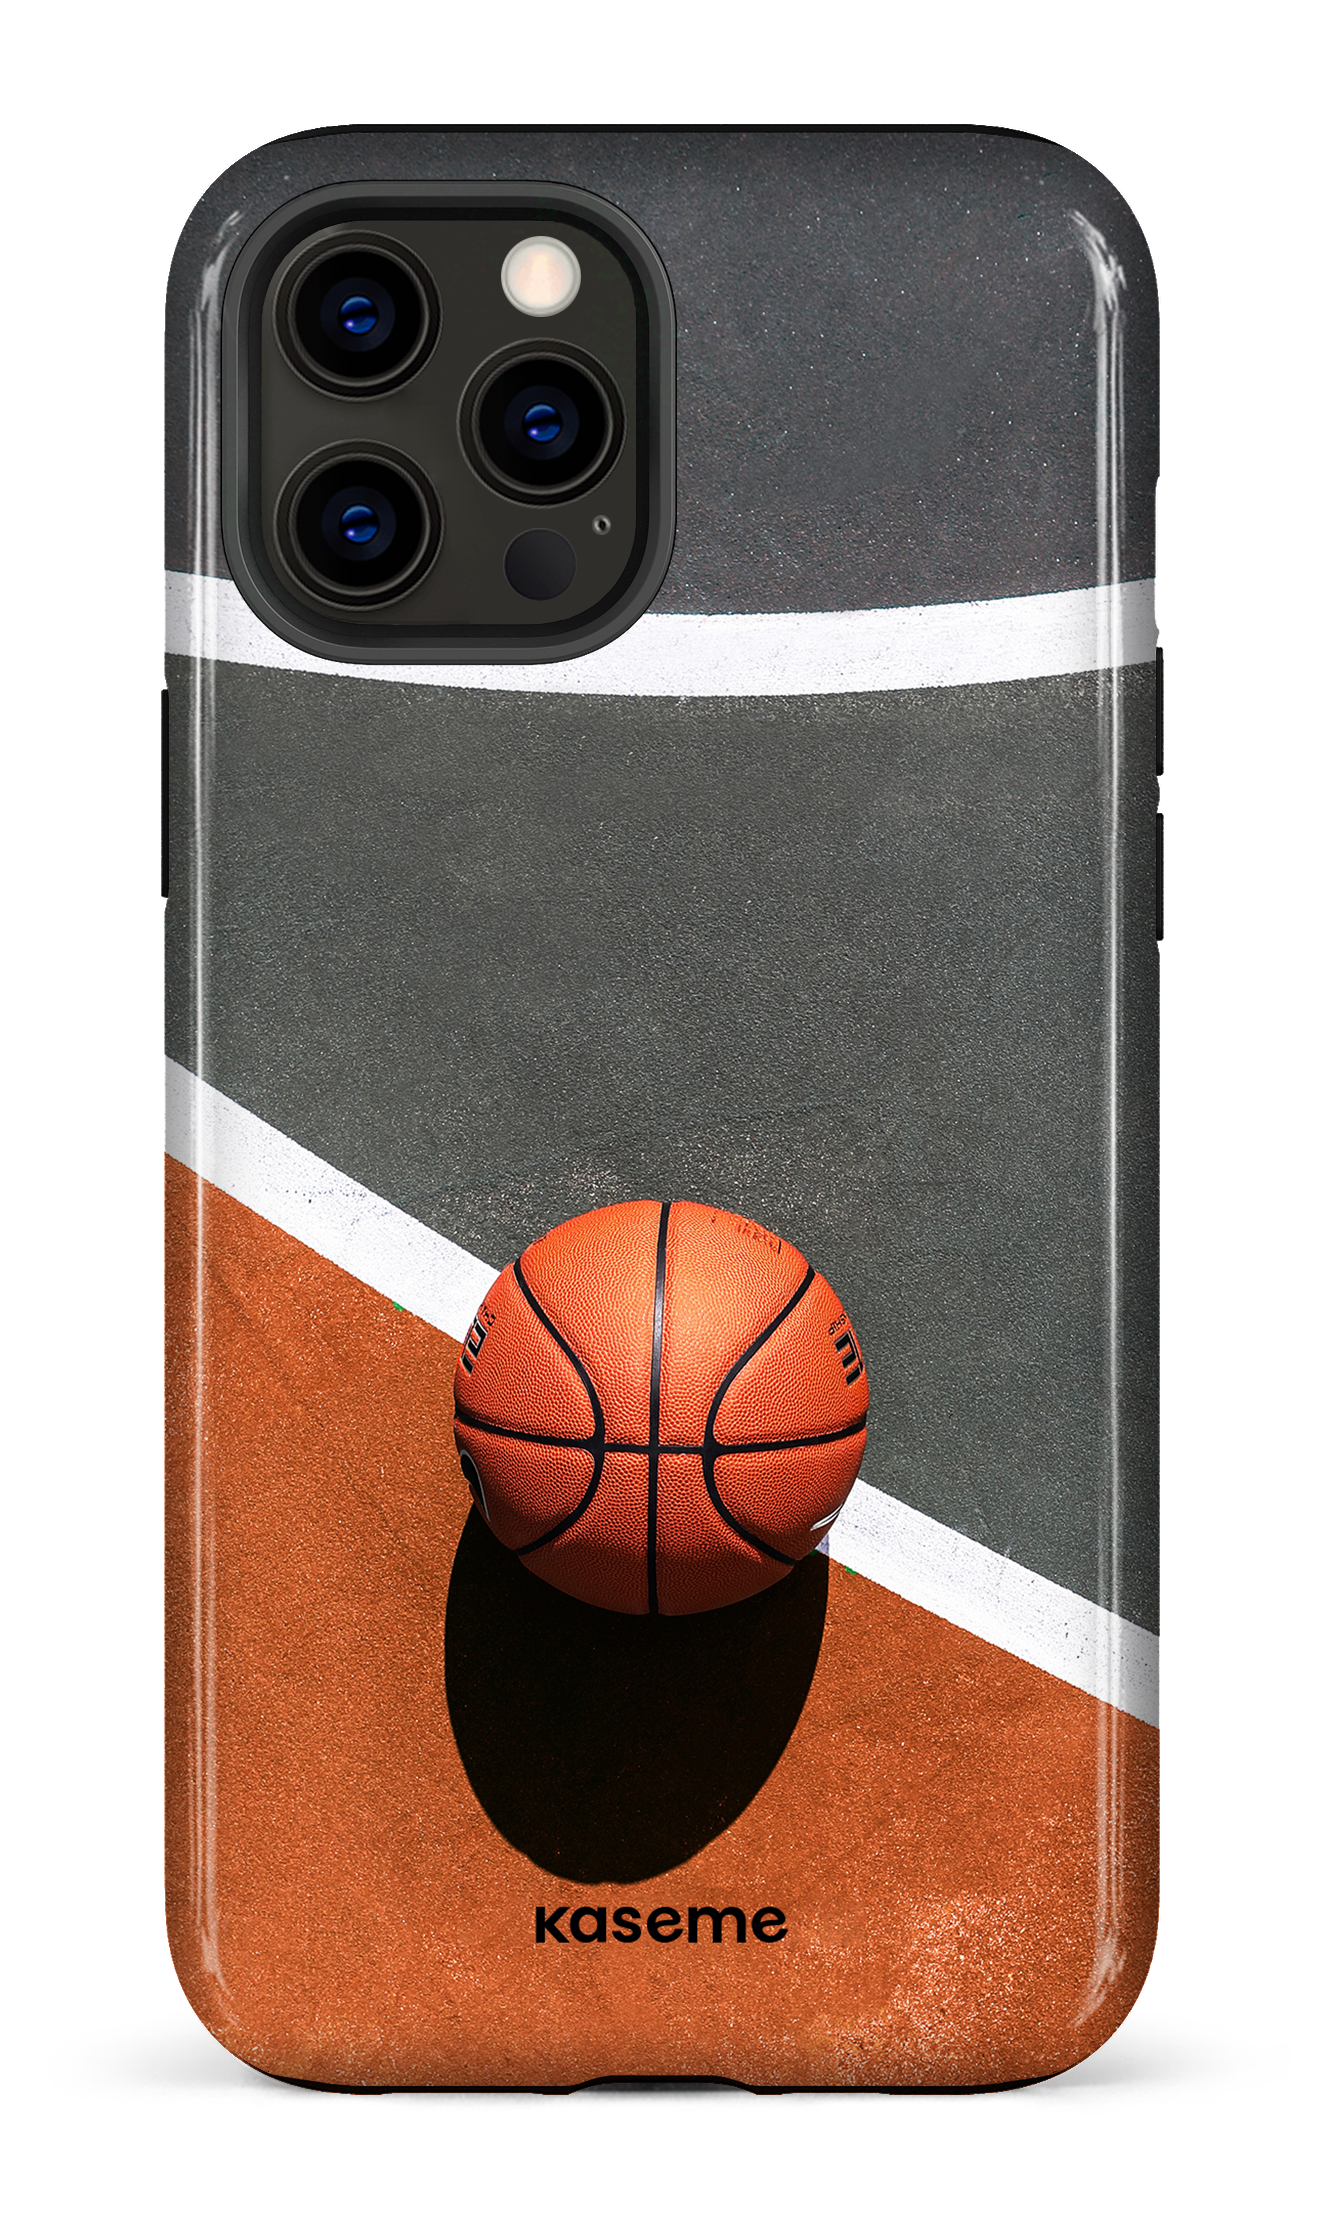 Baller - iPhone 12 Pro Max